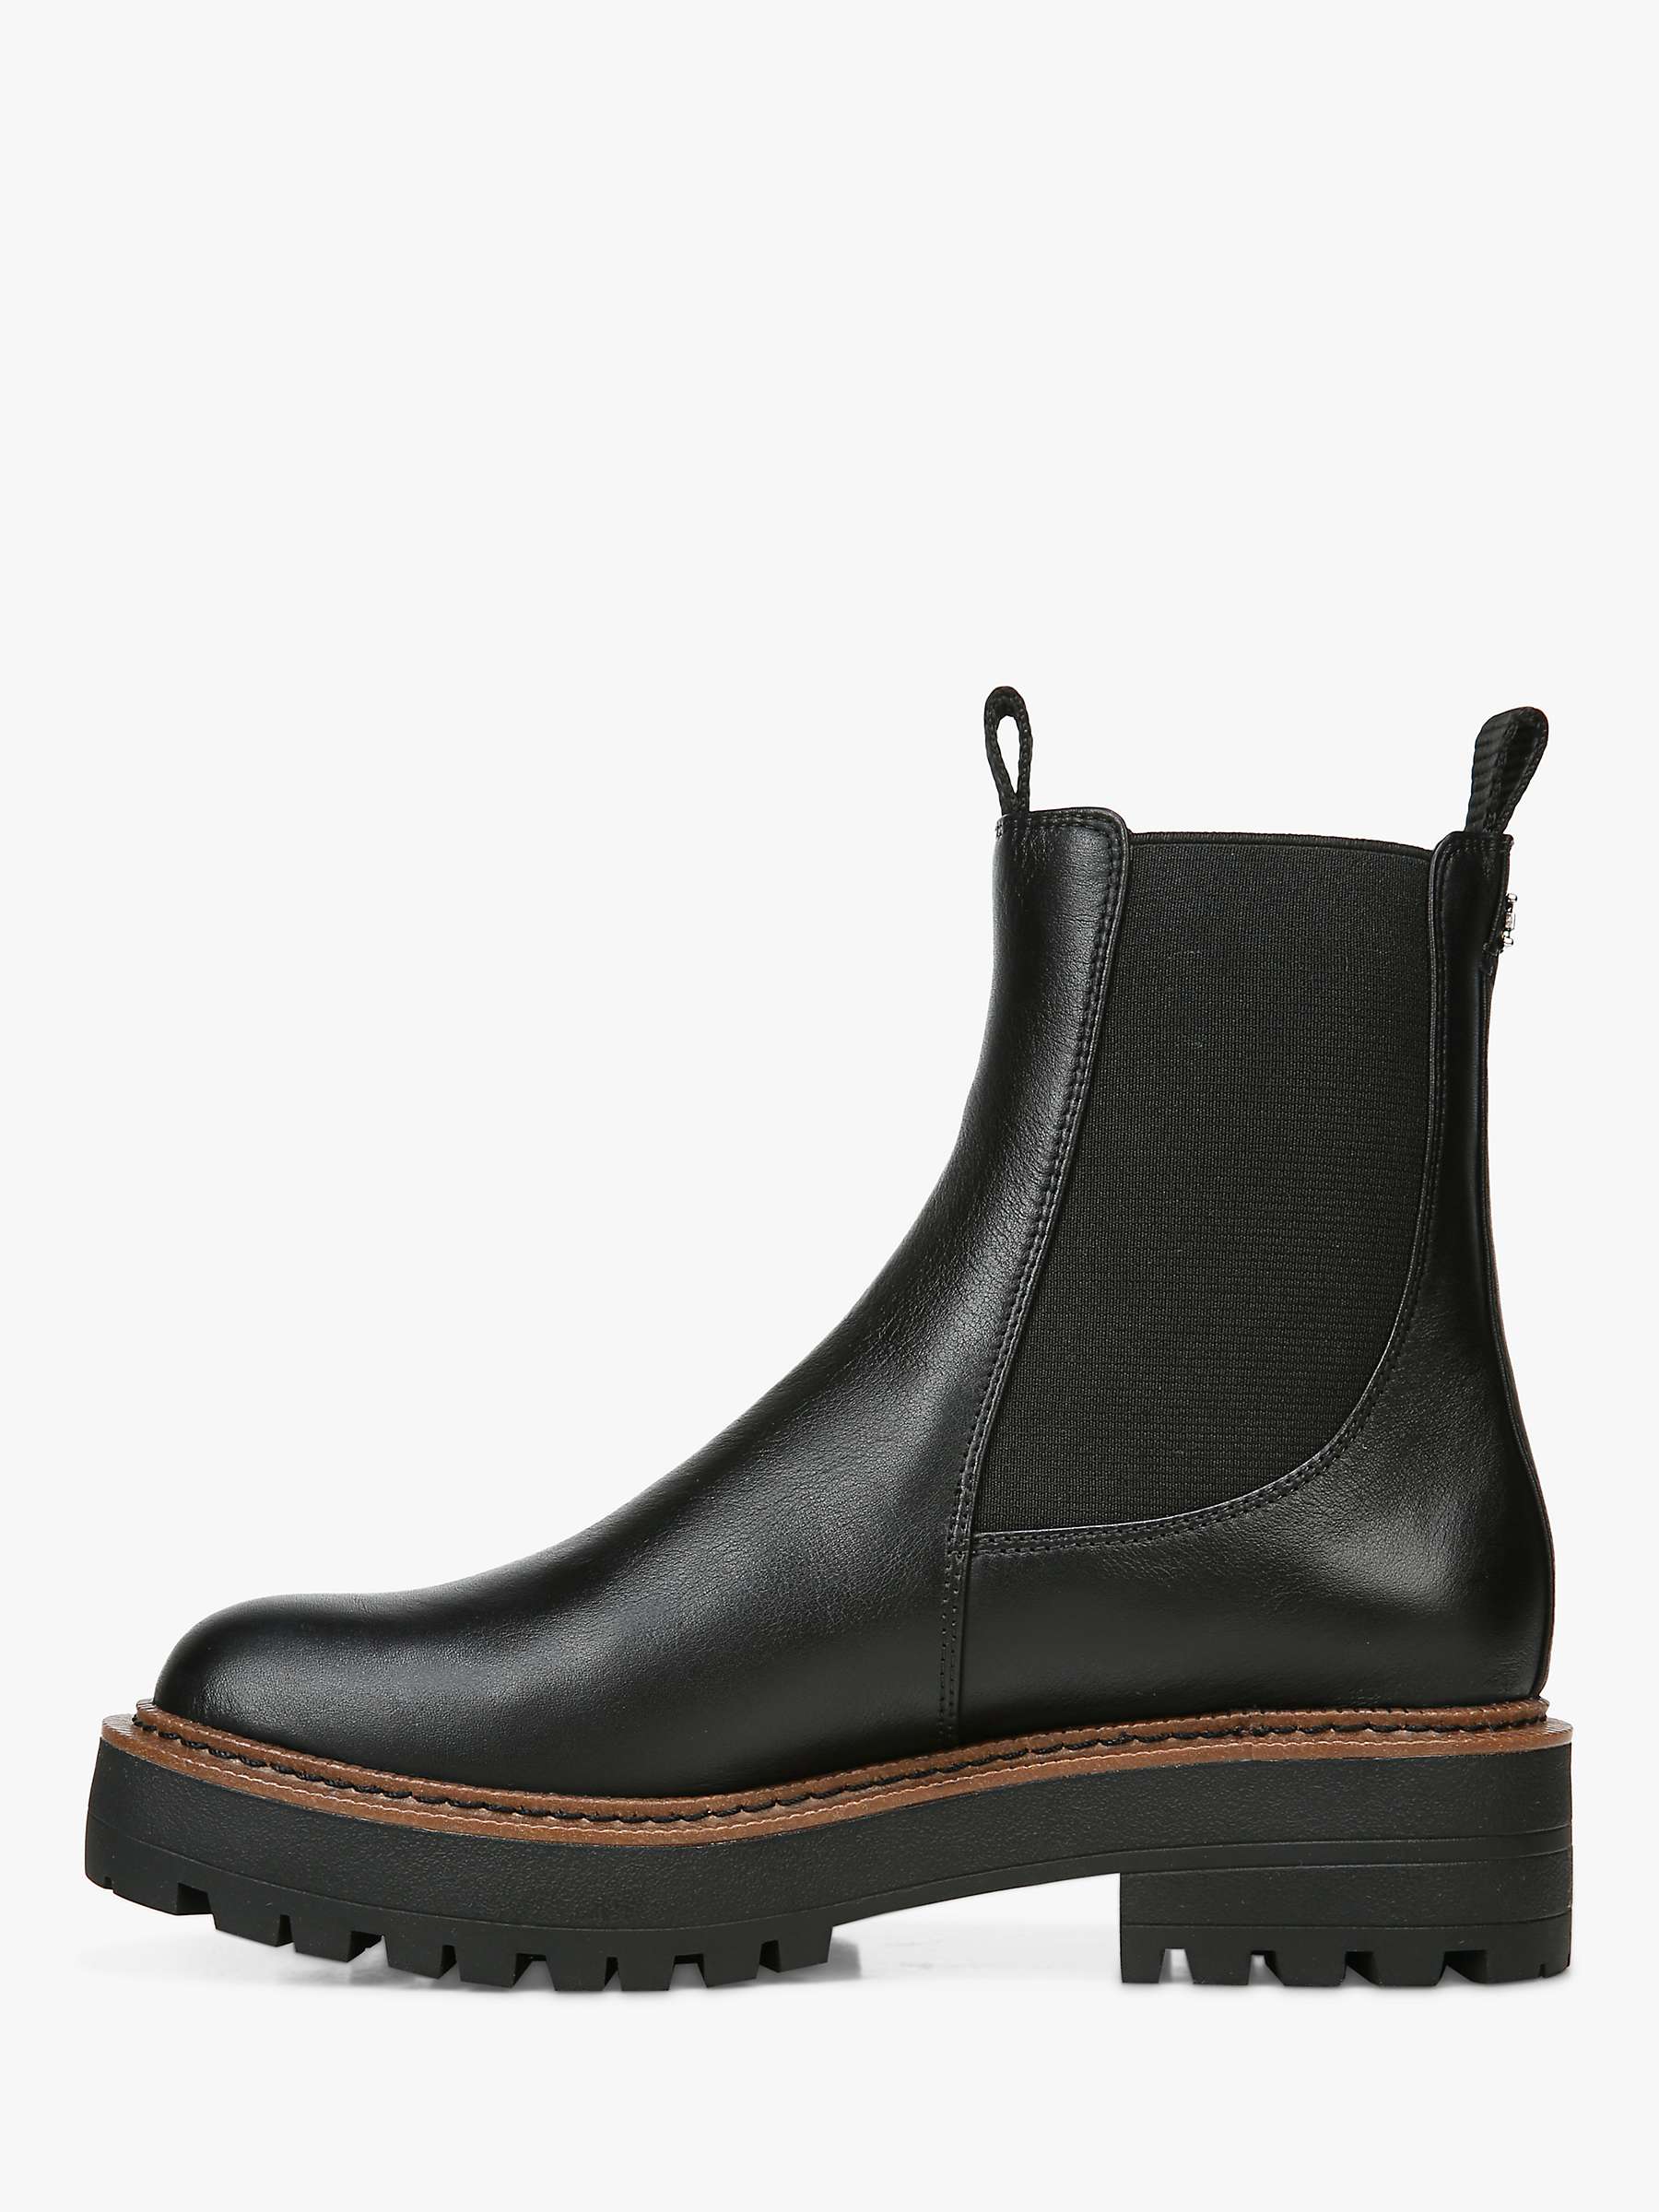 Sam Edelman Laguna Leather Chelsea Boots, Black at John Lewis & Partners